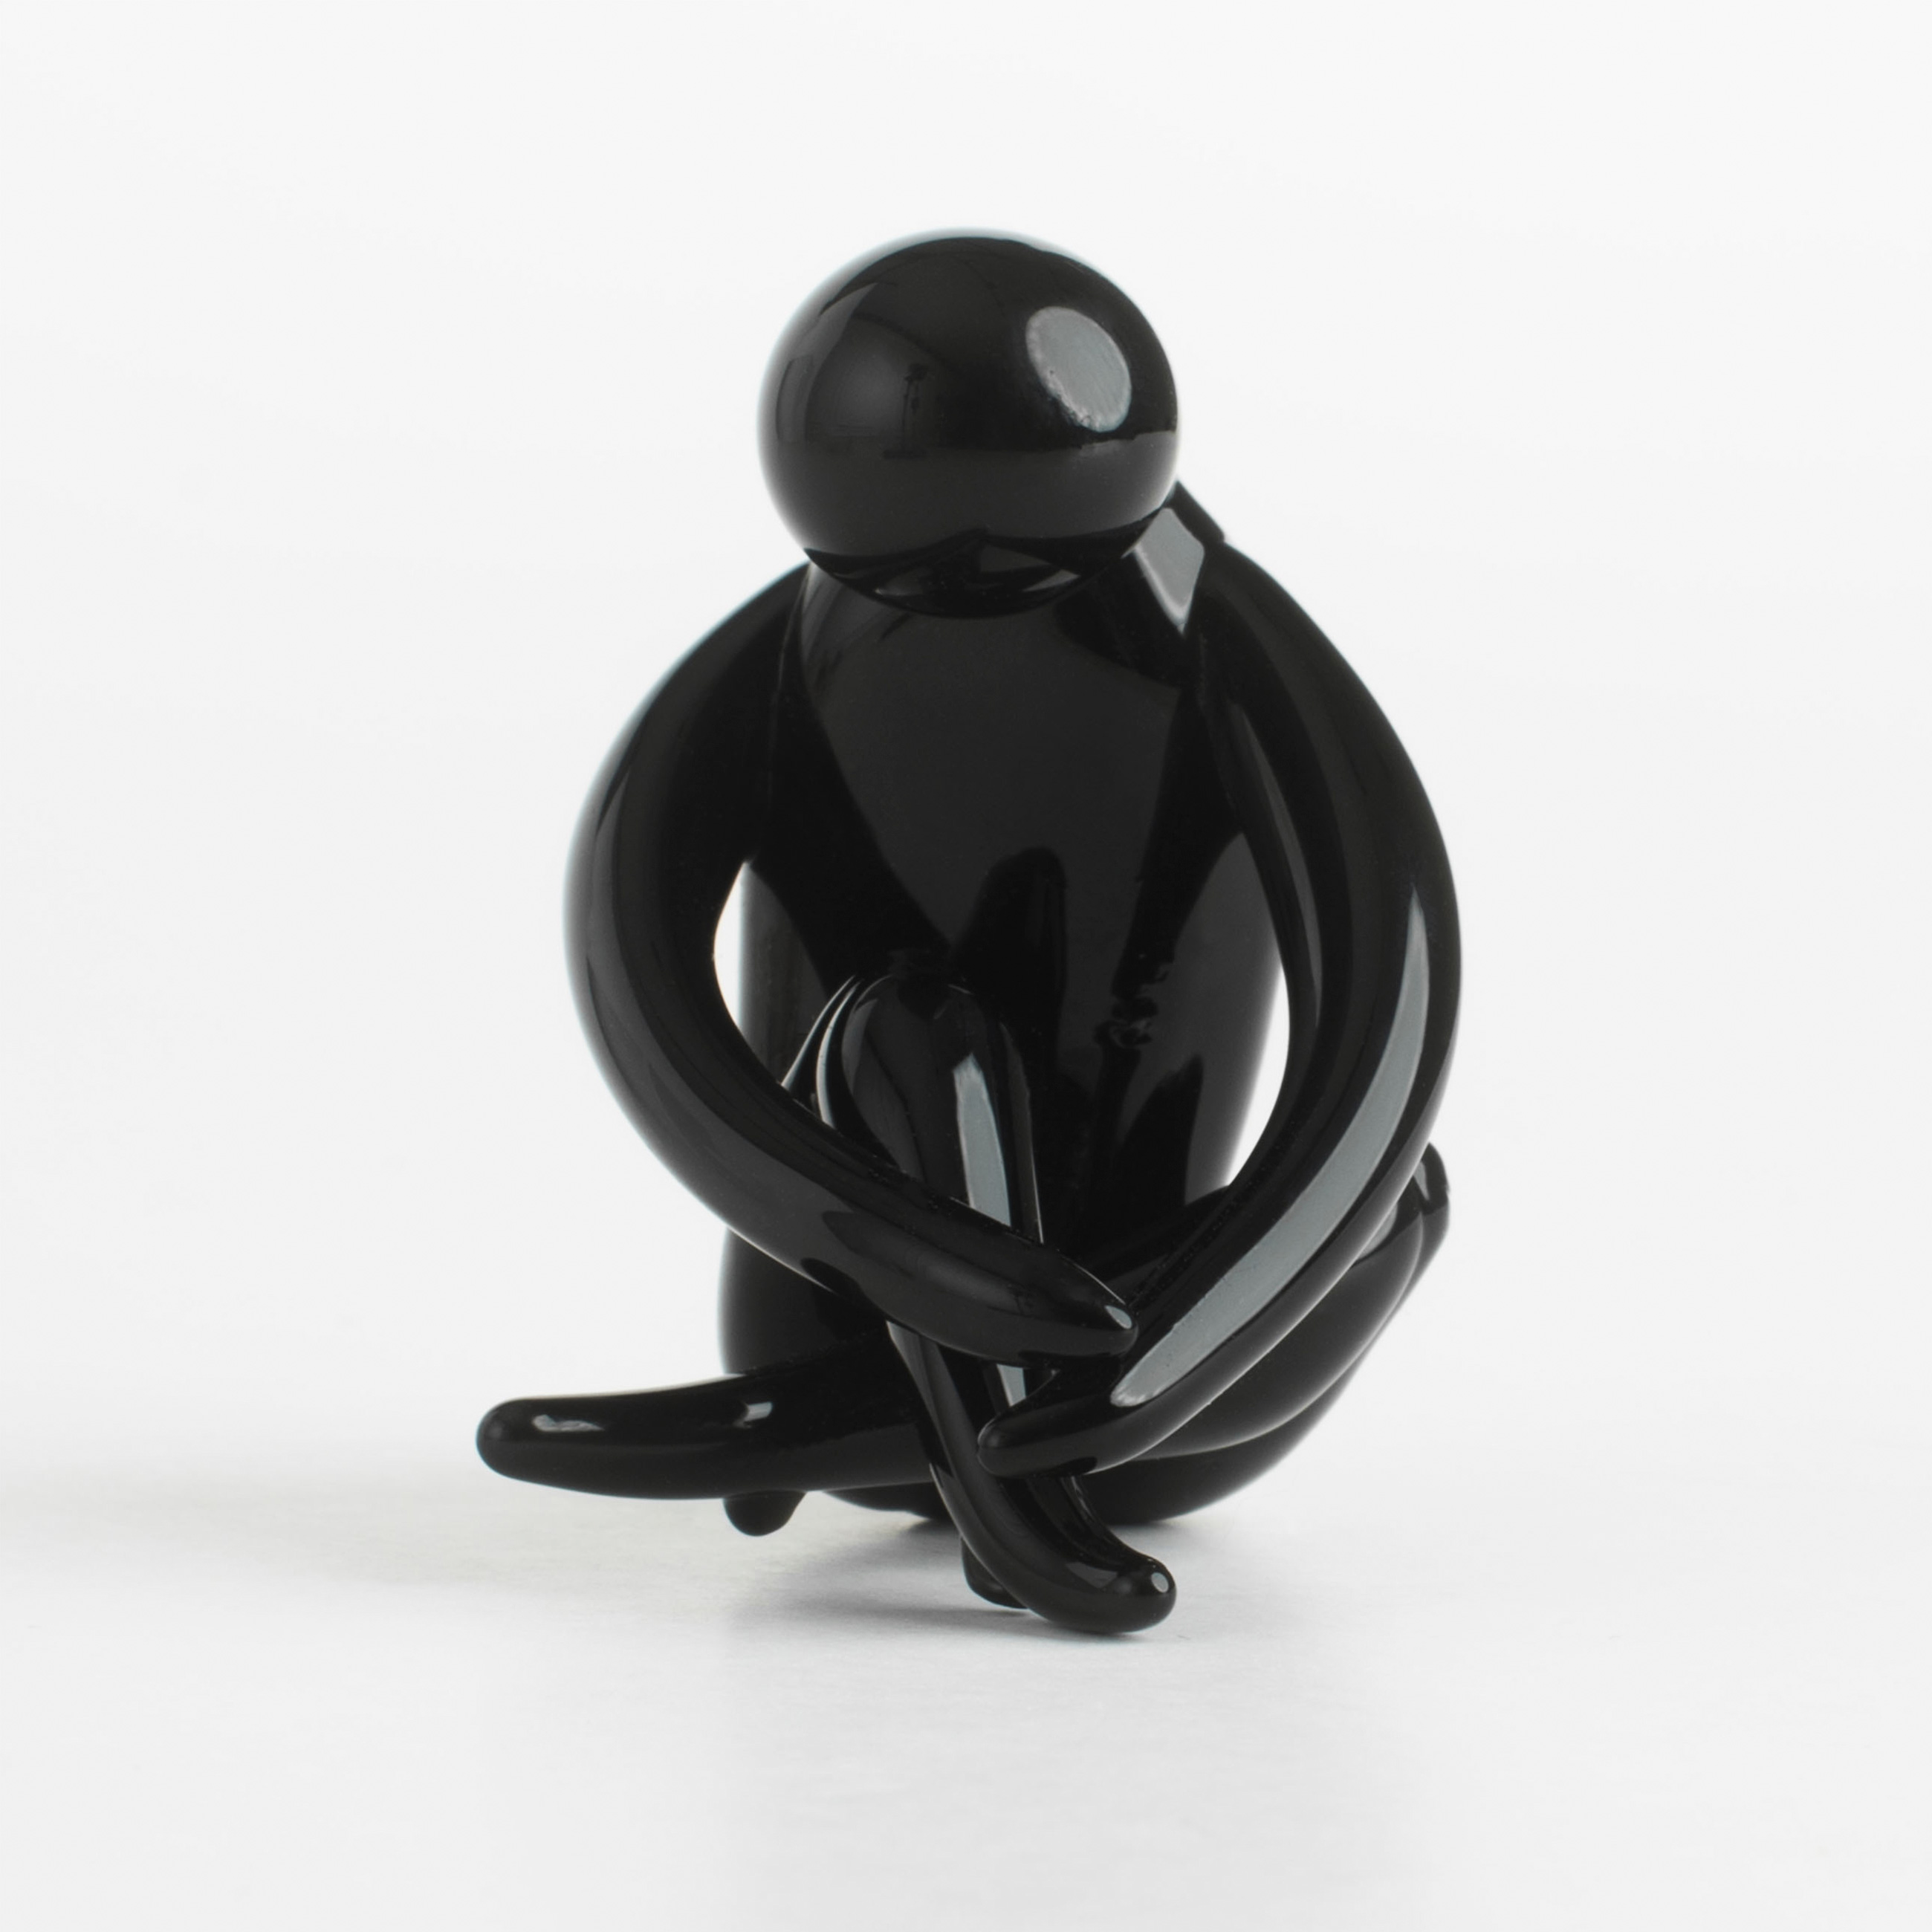 Statuette, 5 cm, glass, black, Figure, Vitreous изображение № 5